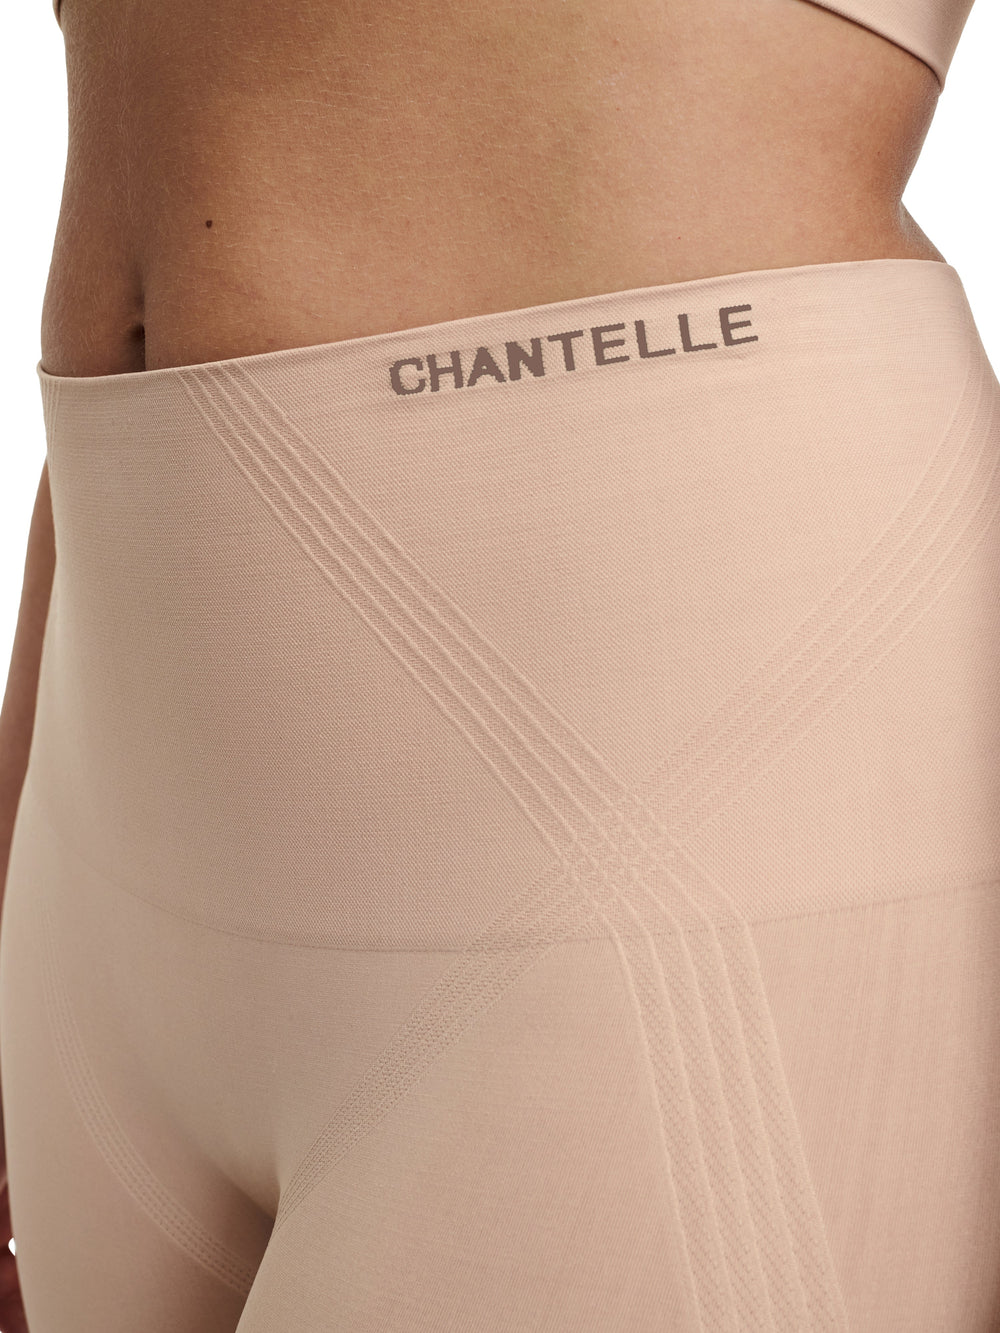 Chantelle 光滑舒适塑形长短裤 - Sirocco 短裤 Chantelle